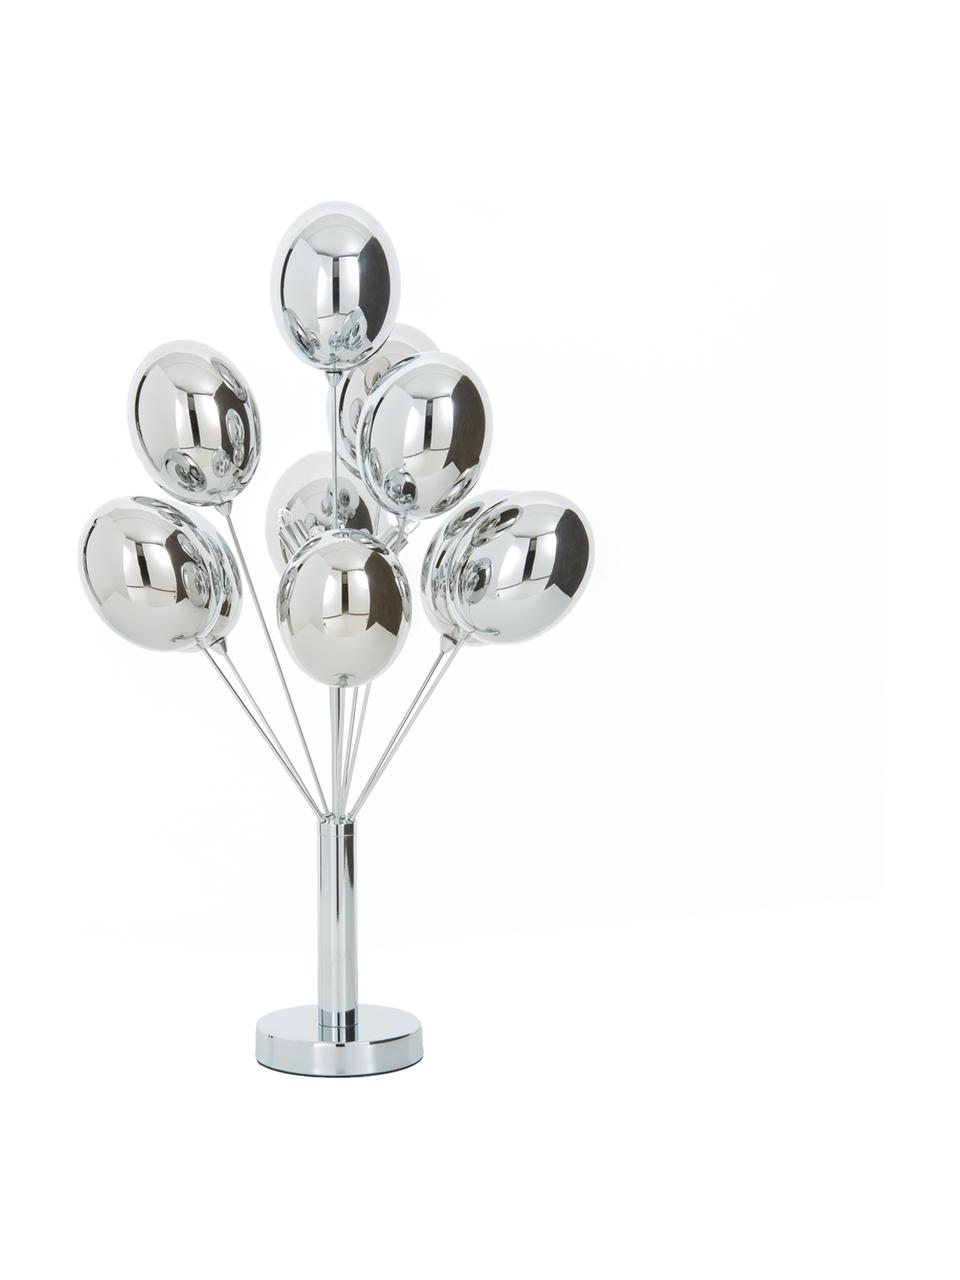 Tafellamp Balloons, Frame: staal, verchroomd, Lampenkap: glas, geverfd, Zilverkleurig, B 36 x H 68 cm